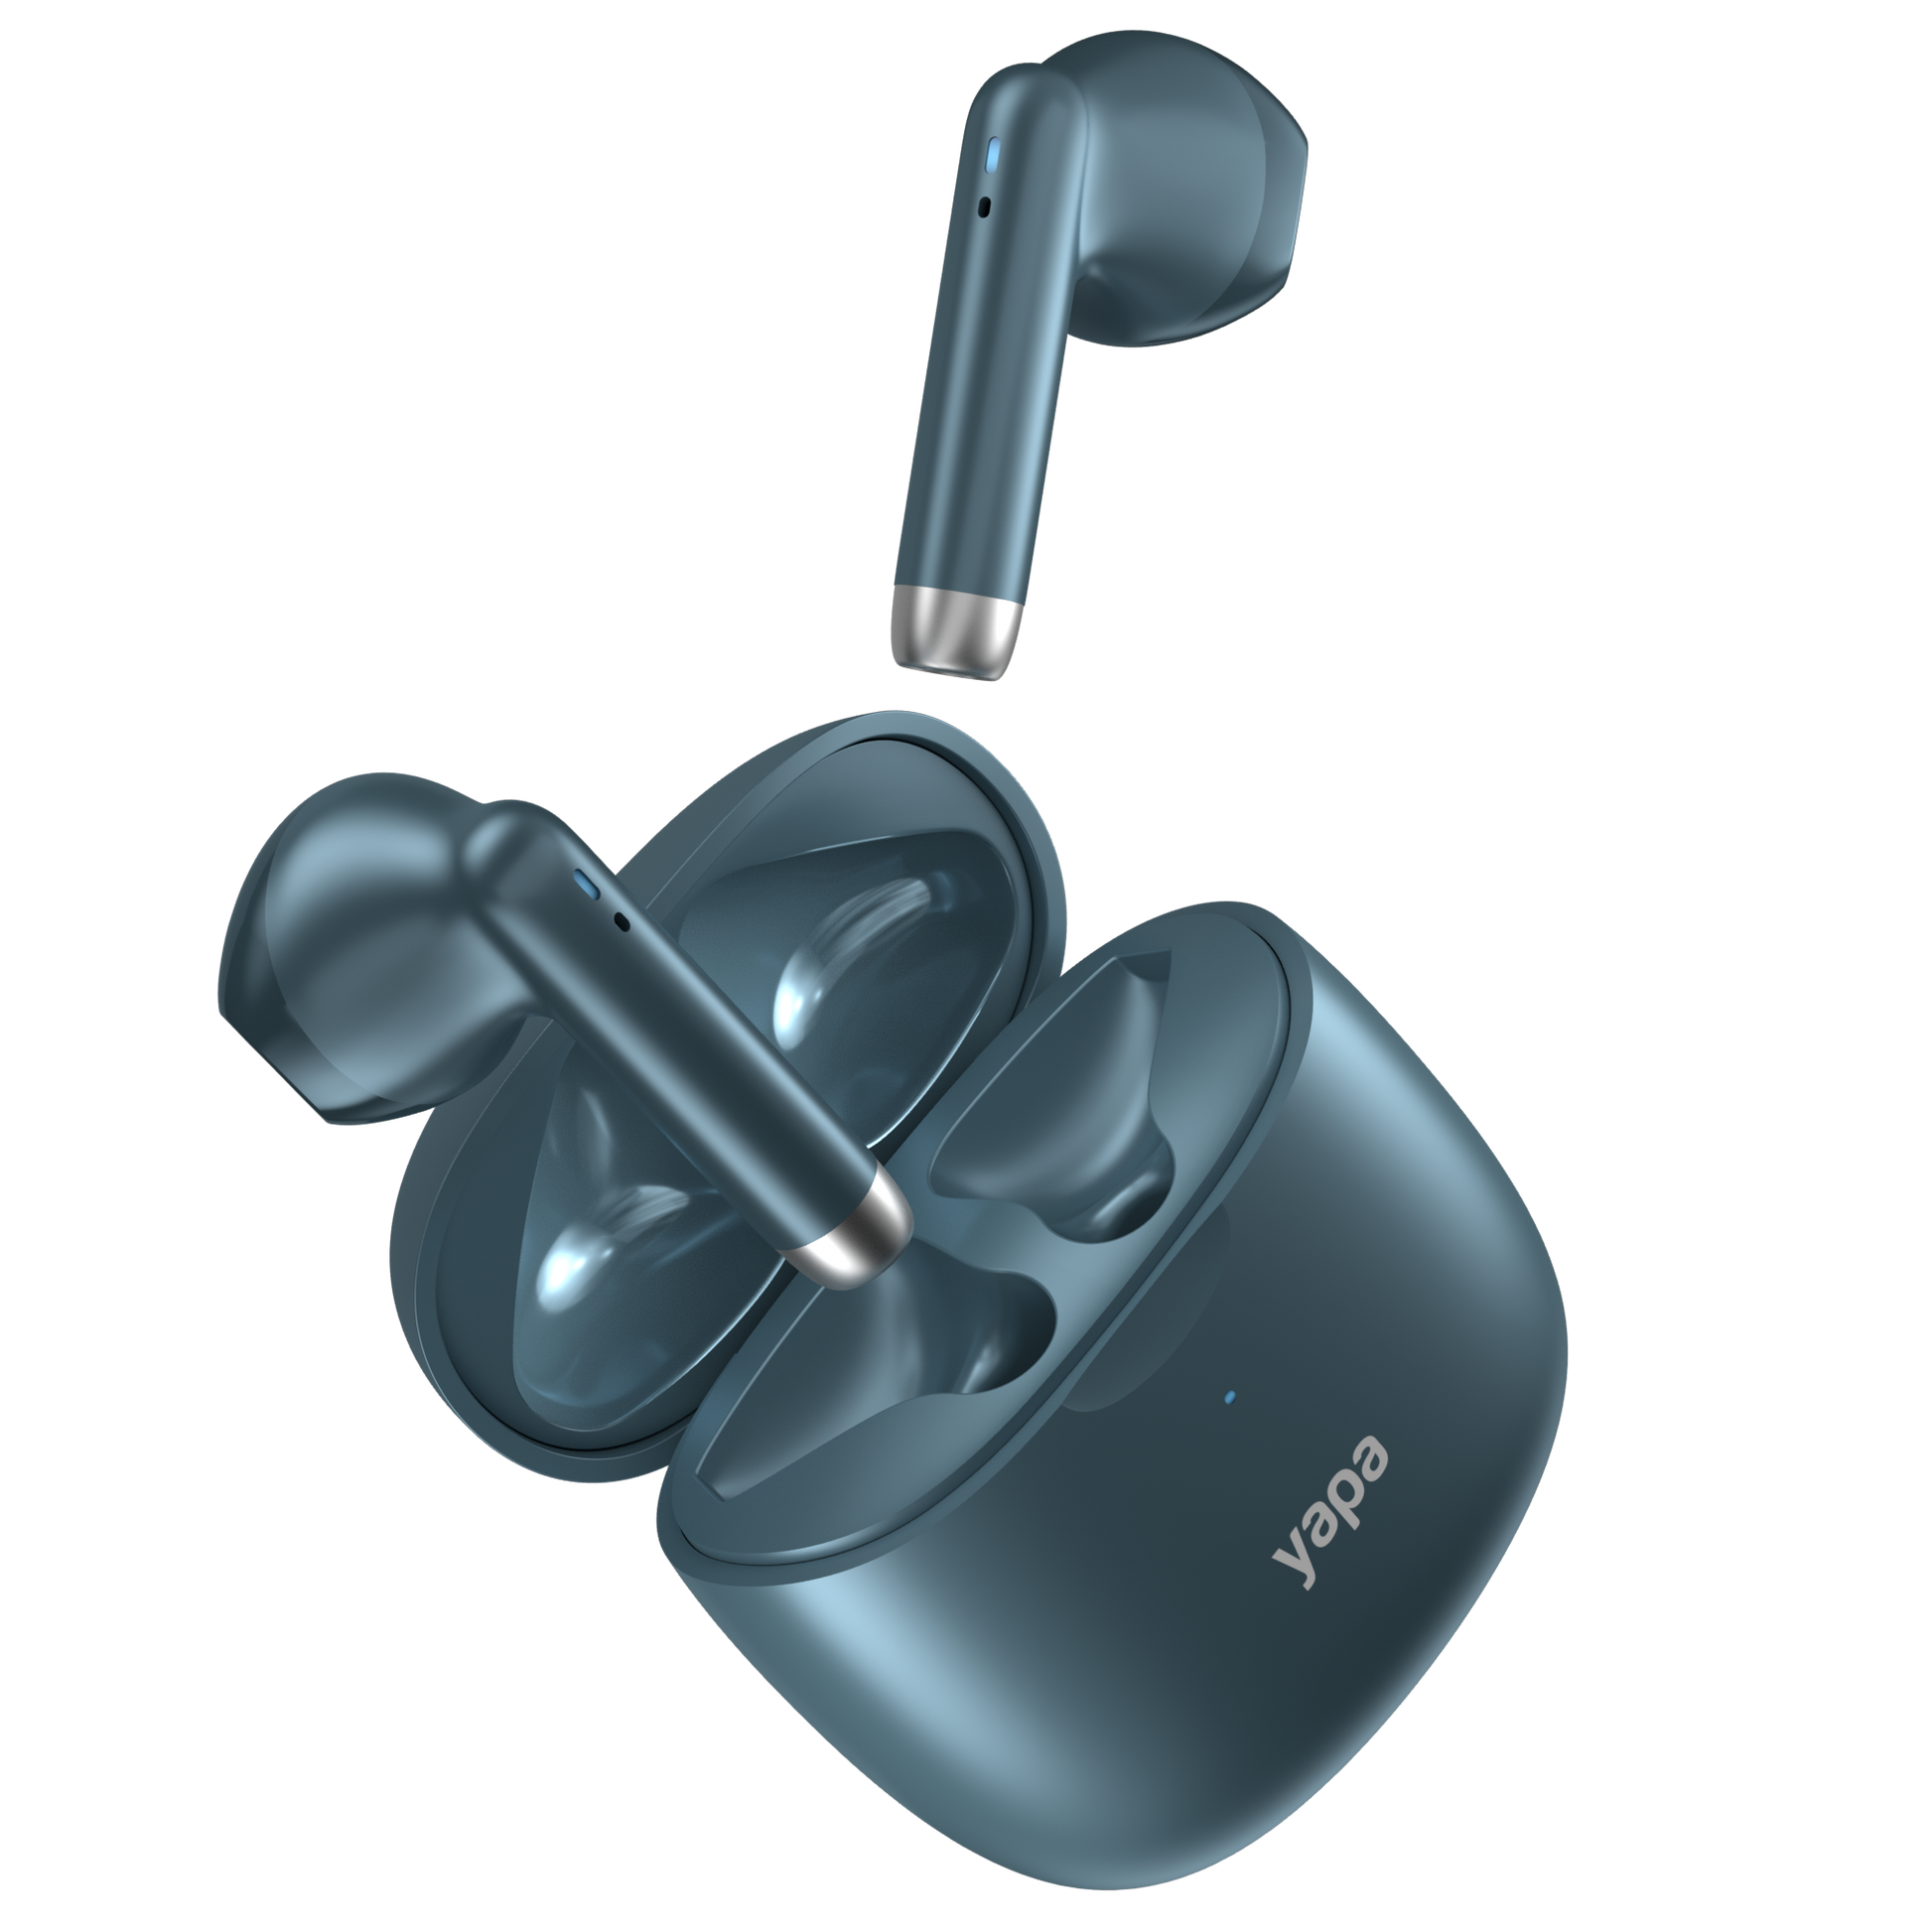 Yapa Pro Wireless Earbuds Blue | True Wireless Earbuds | Wireless Earbuds | the Best Wireless Earbuds | Best Sound Quality Wireless Earbuds | High Quality Earbuds | Yapa Electronics